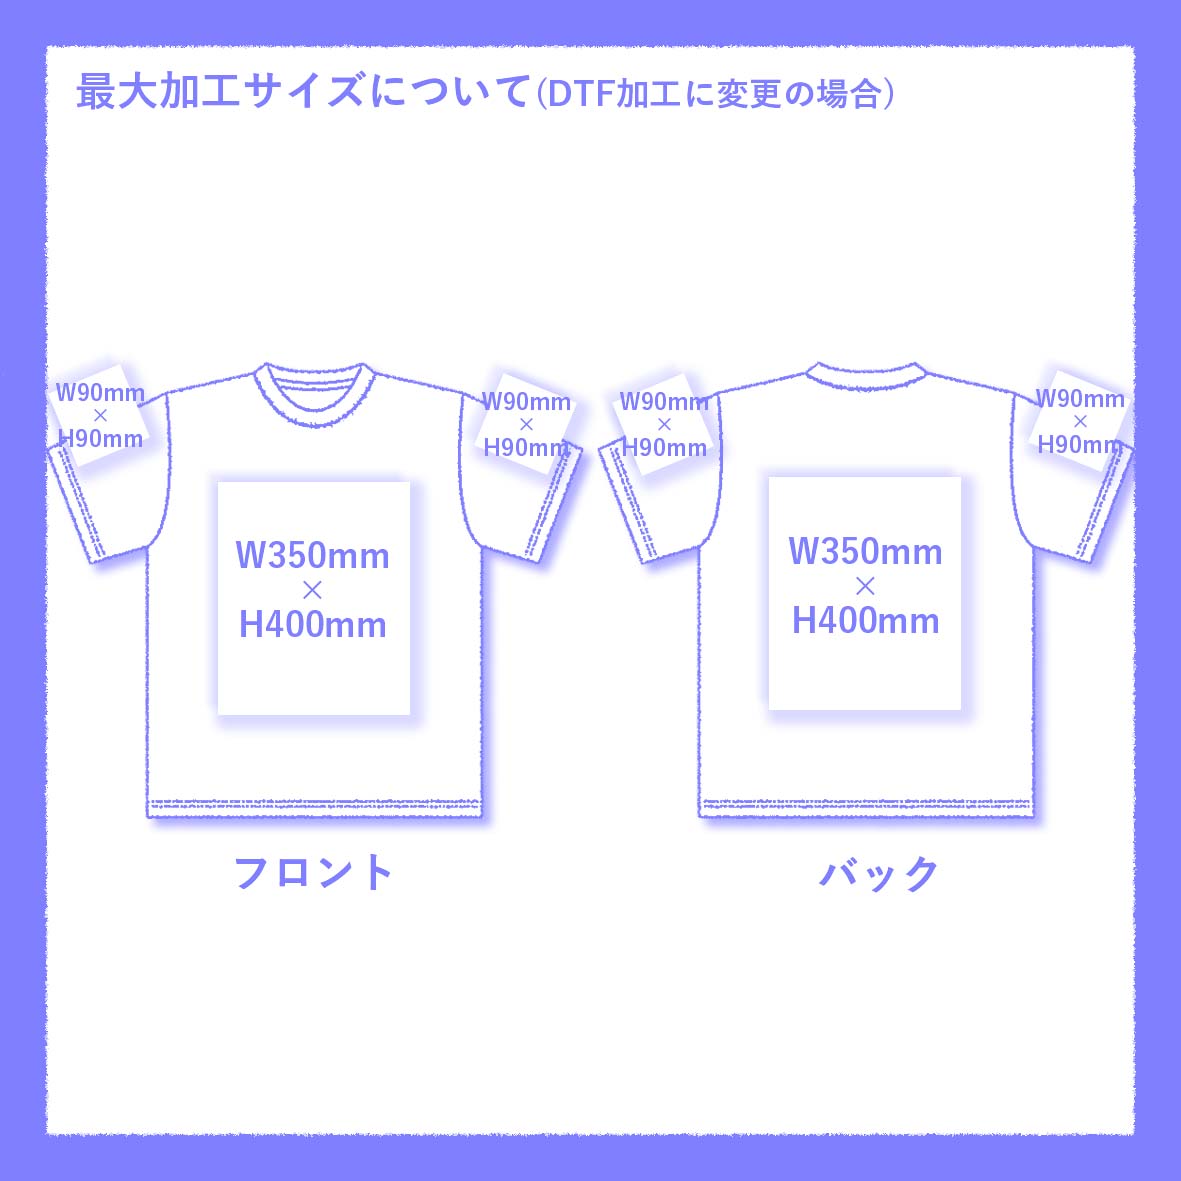 SHAKA WEAR シャカウェア 7.5 oz Max Heavyweight Garment Dye (品番GARMENT-Dye-SS)